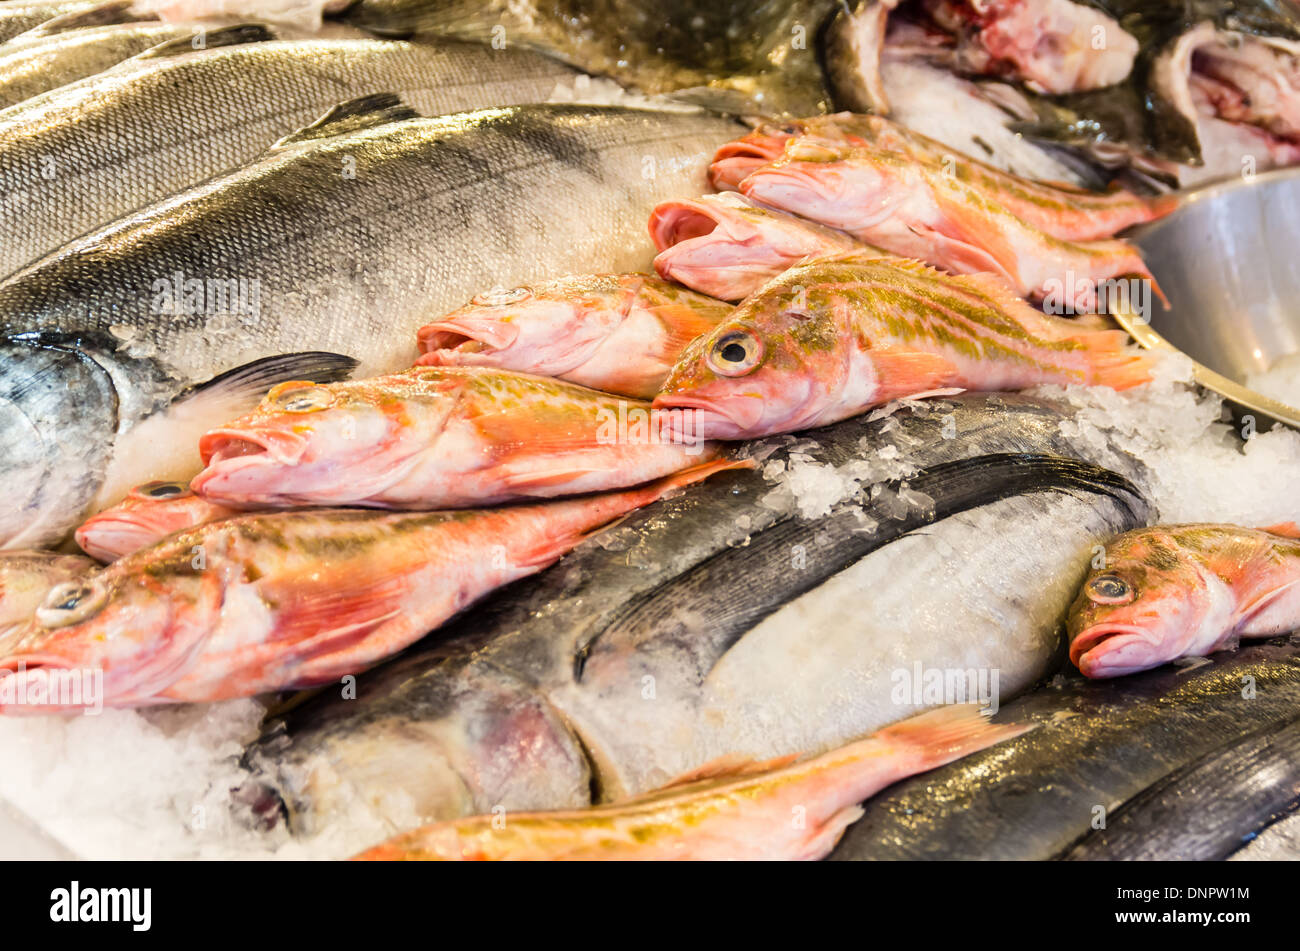 Fresh fish on ice in a fish monger's market stall Pike Place Market Seattle, Washington, USA Stock Photo